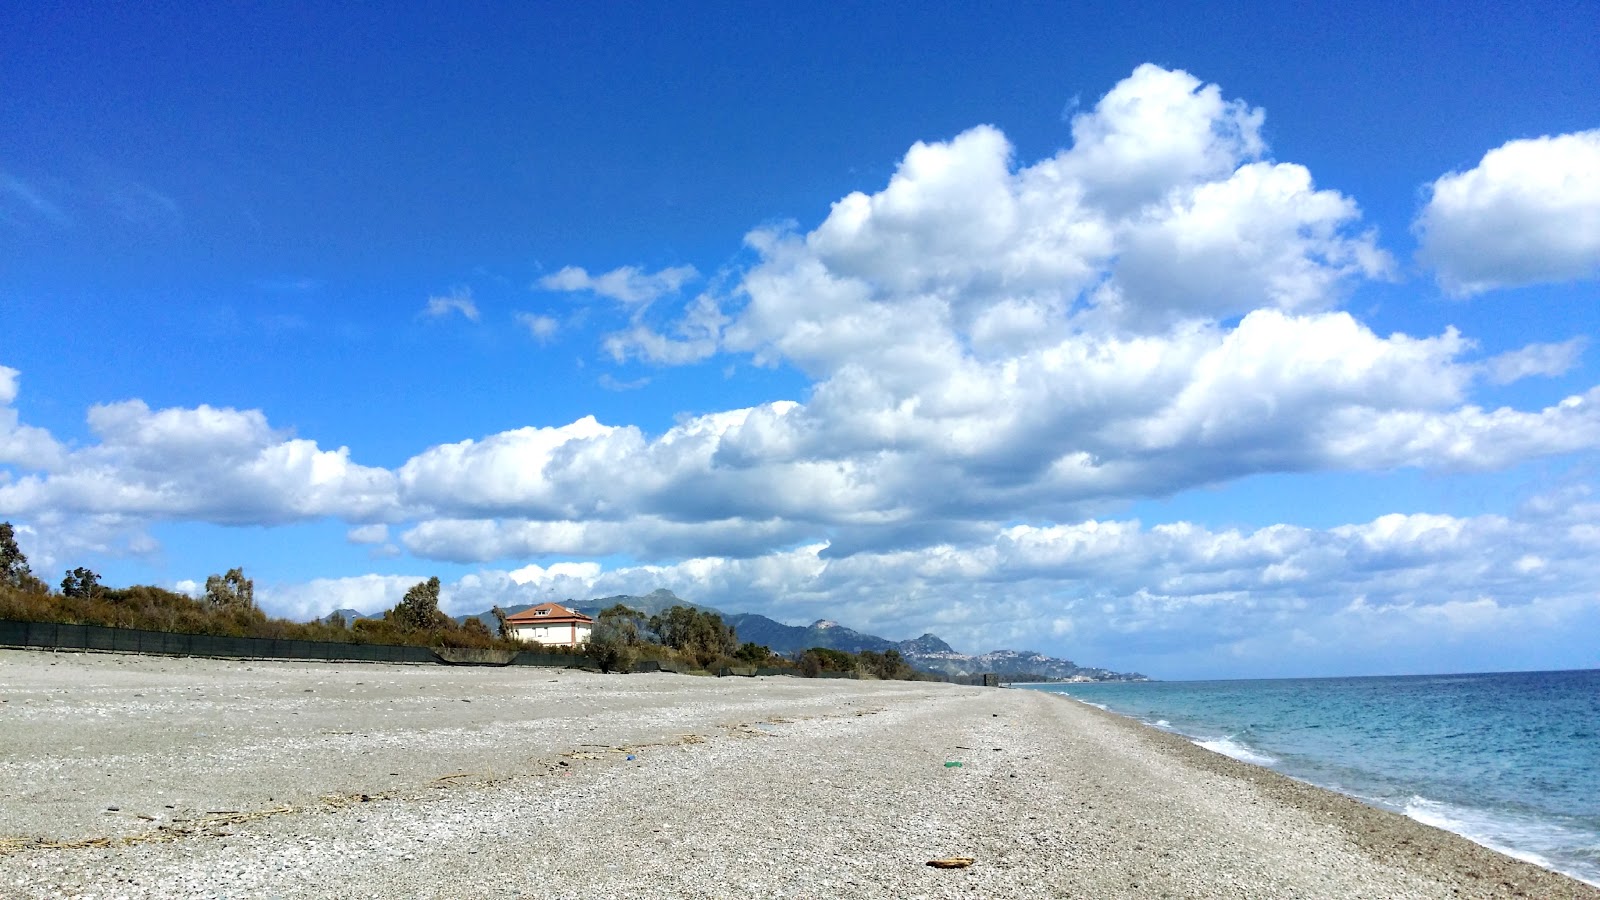 Photo of Spiaggia Fondachello with long straight shore